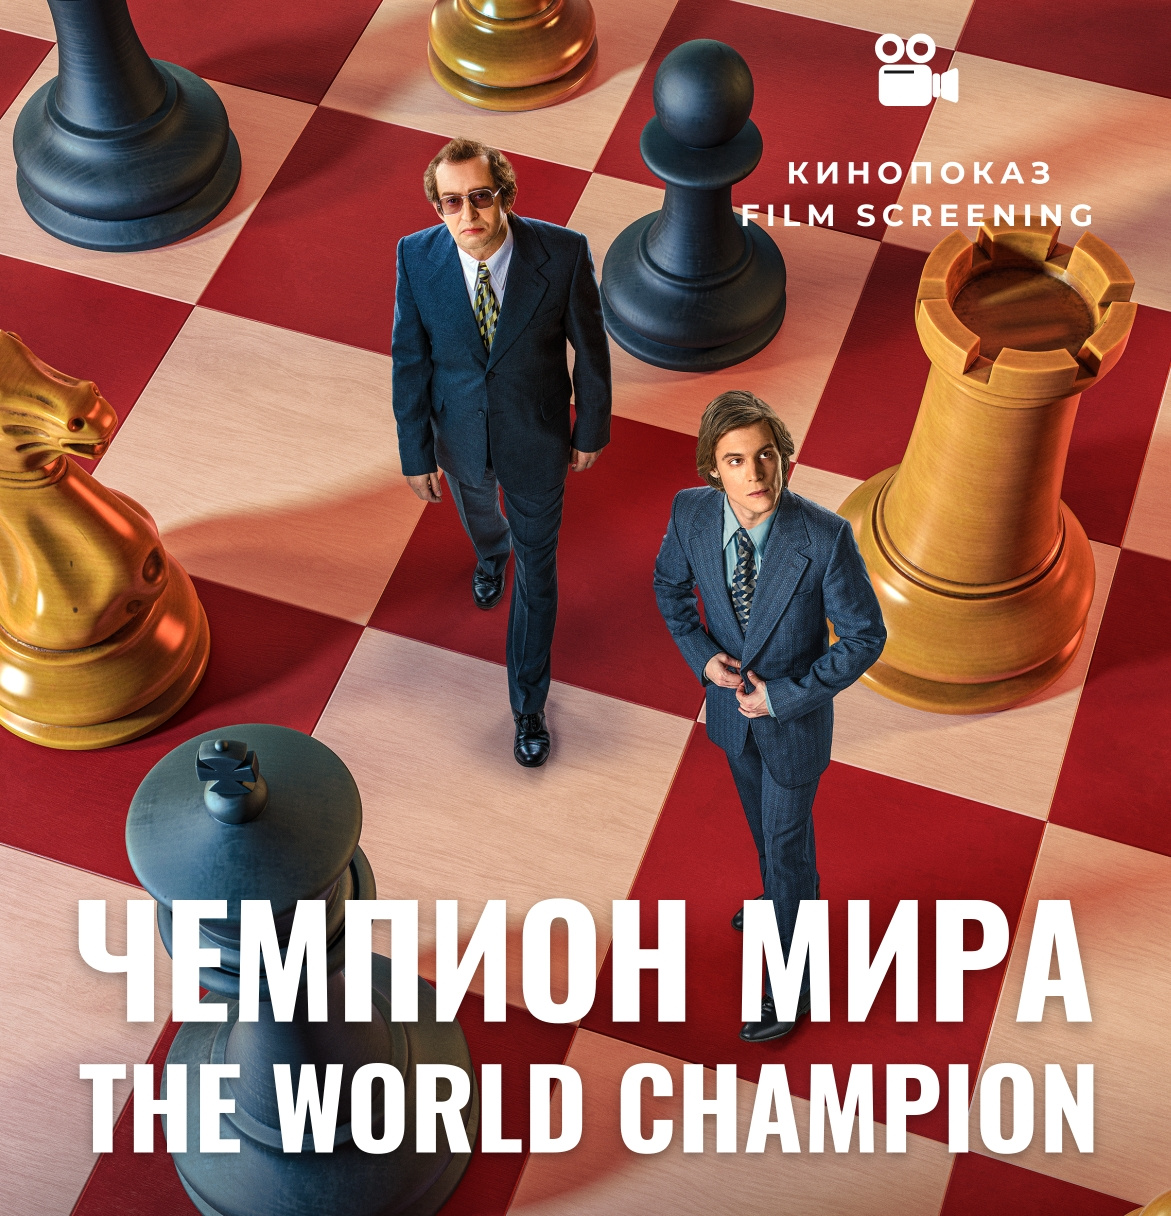 The world champion film poster